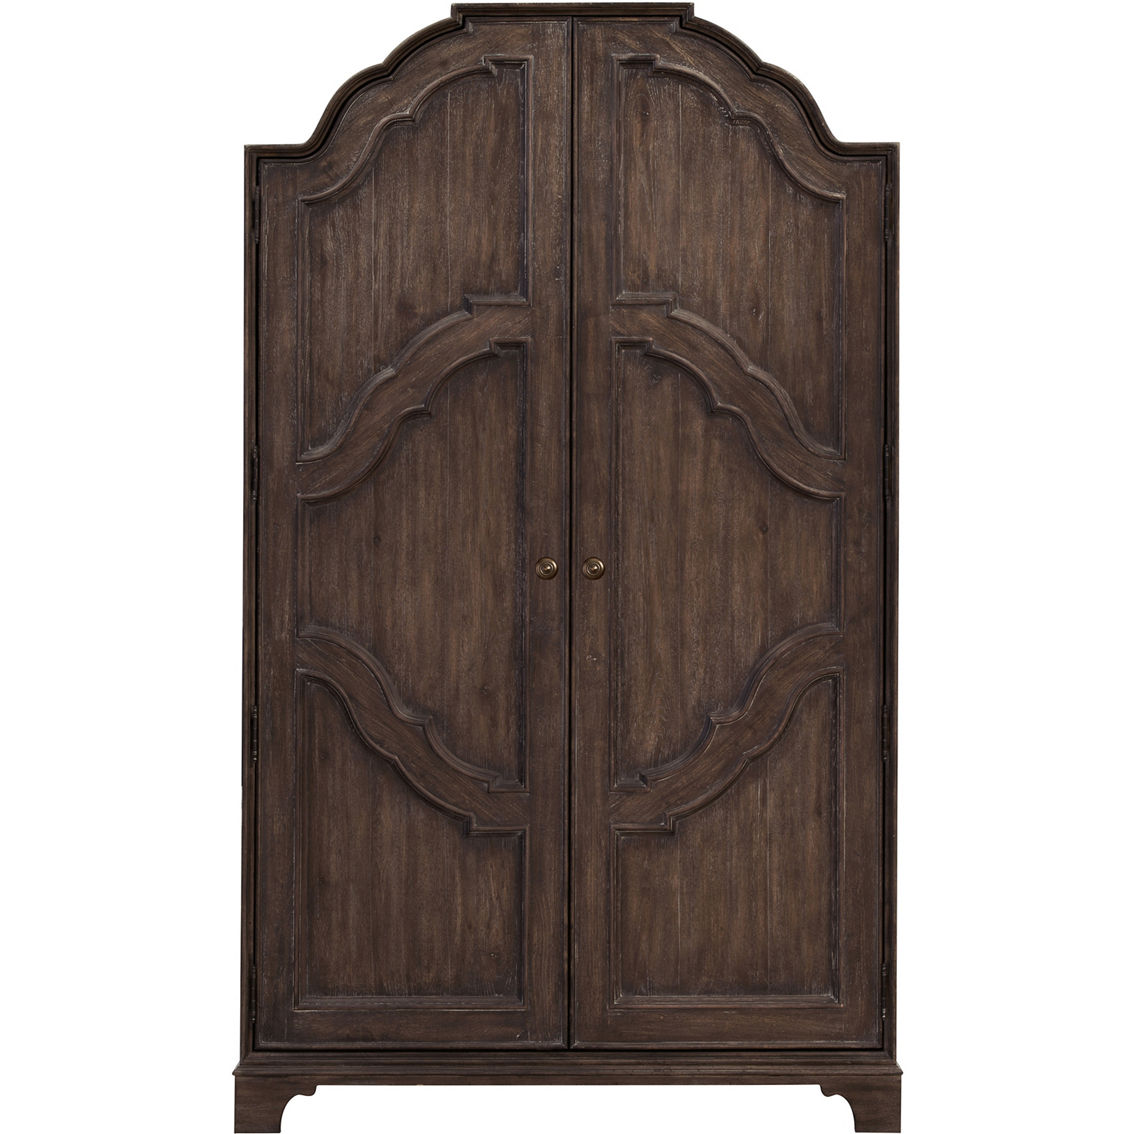 Pulaski Furniture Revival Row 2-Door Armoire - Image 2 of 6